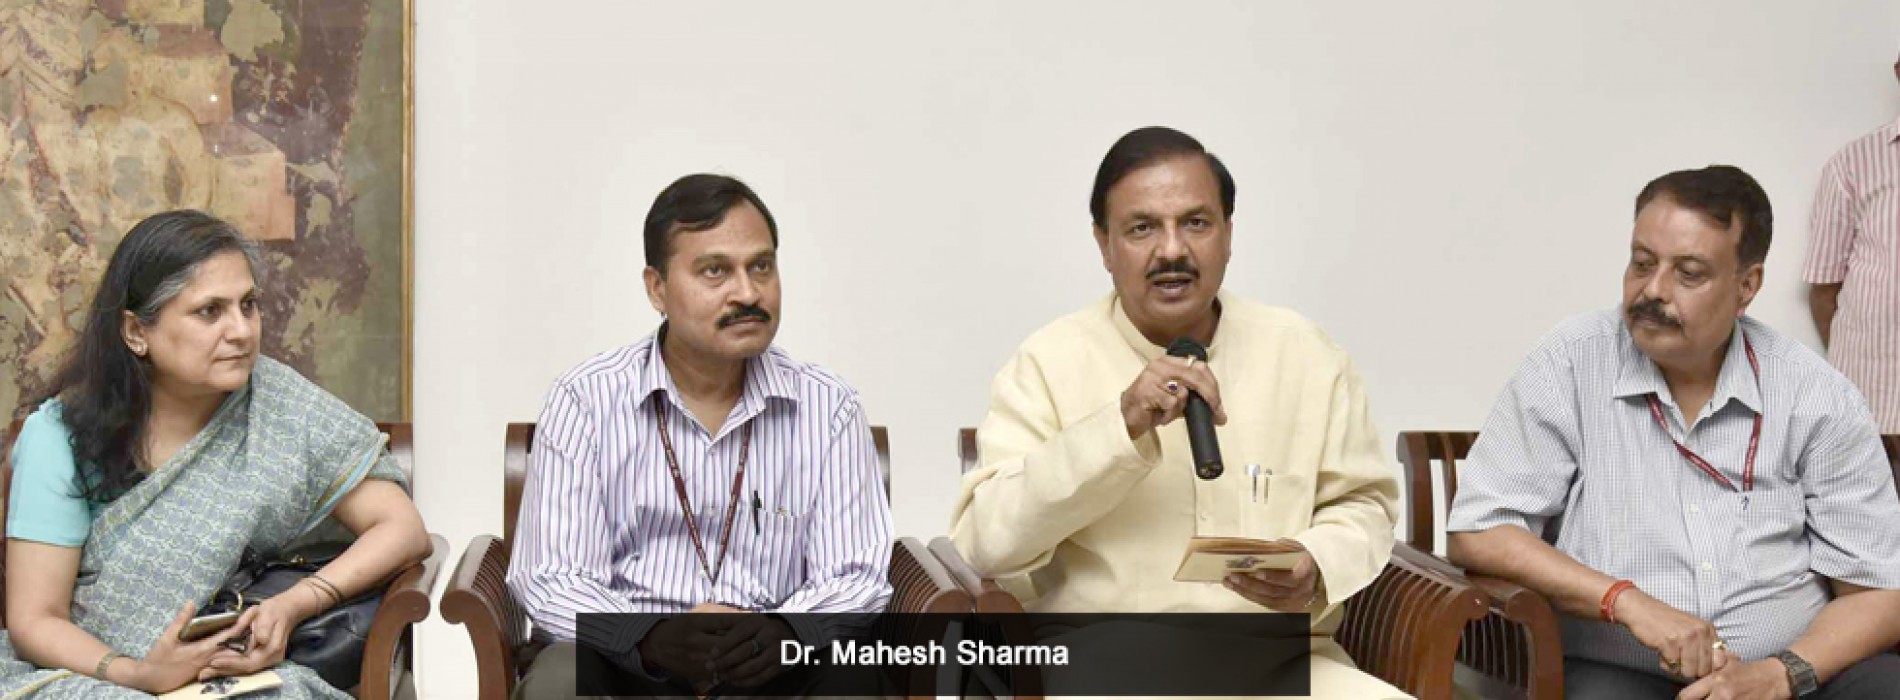 Dr. Mahesh Sharma participated in ‘Swachhta Hi Sewa Abhiyaan’ in Noida